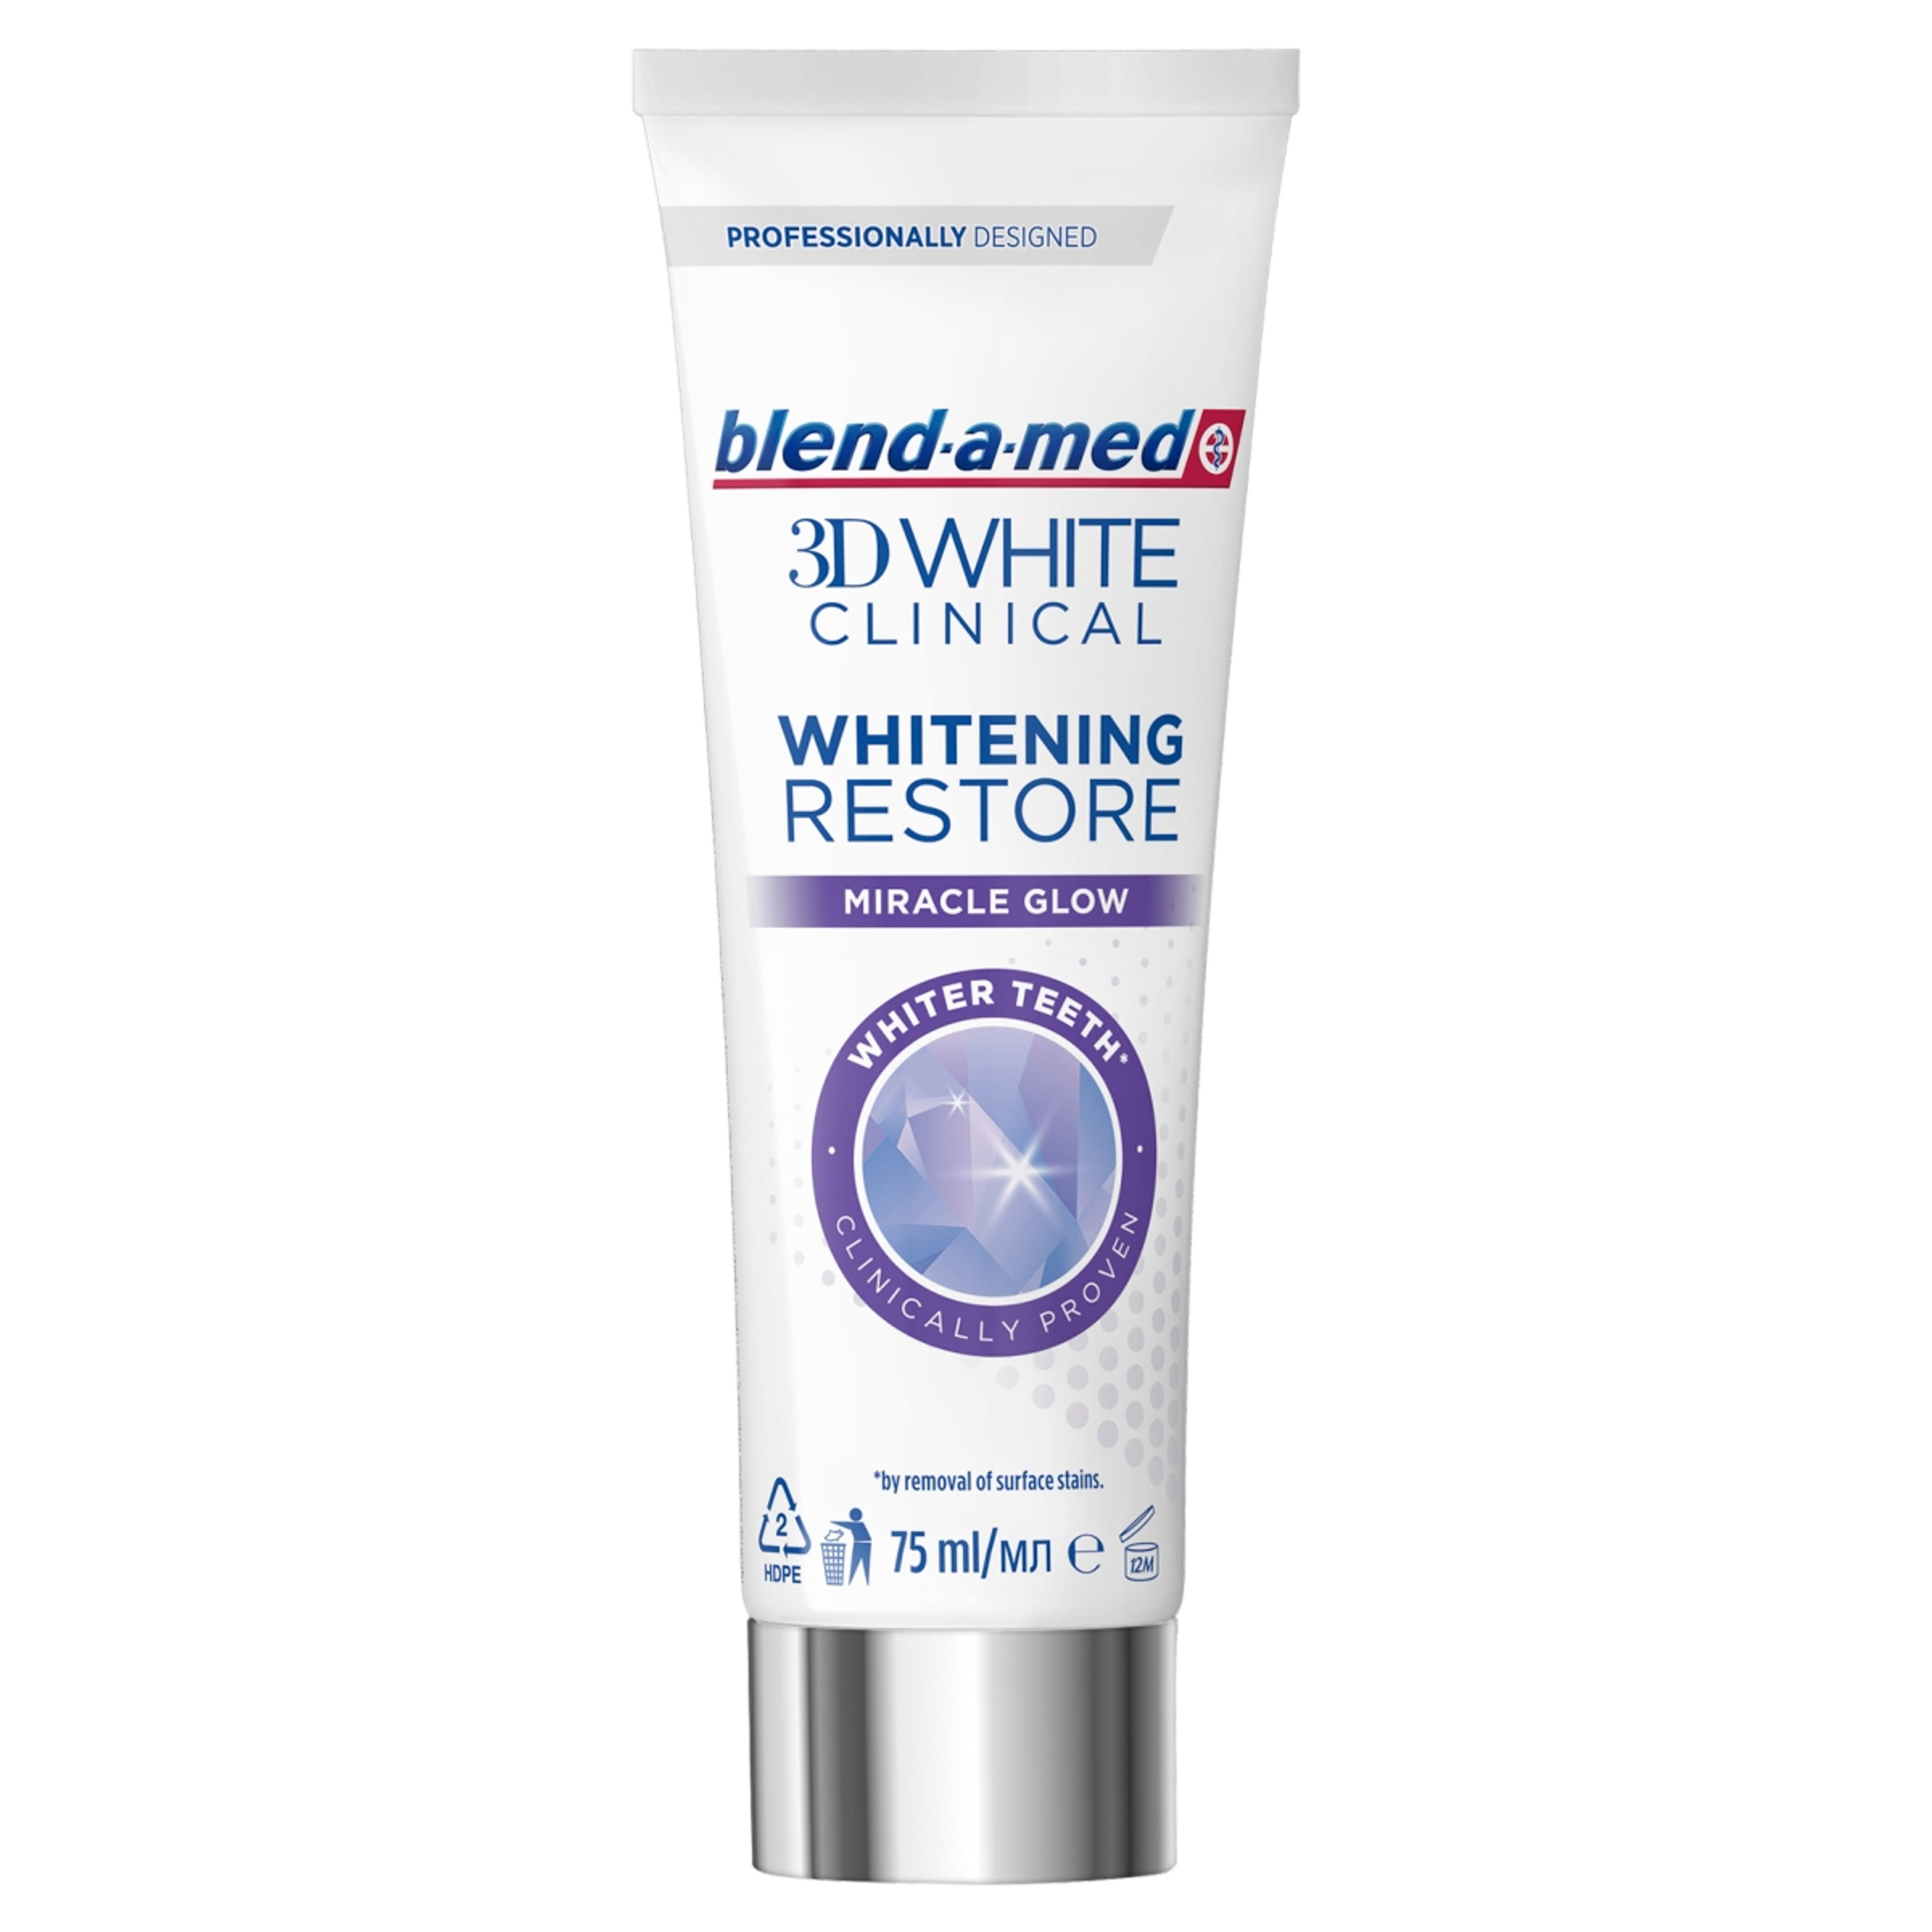 Blend-a-med 3D White Clinical Miracle Glow fogkrém - 75 ml-11